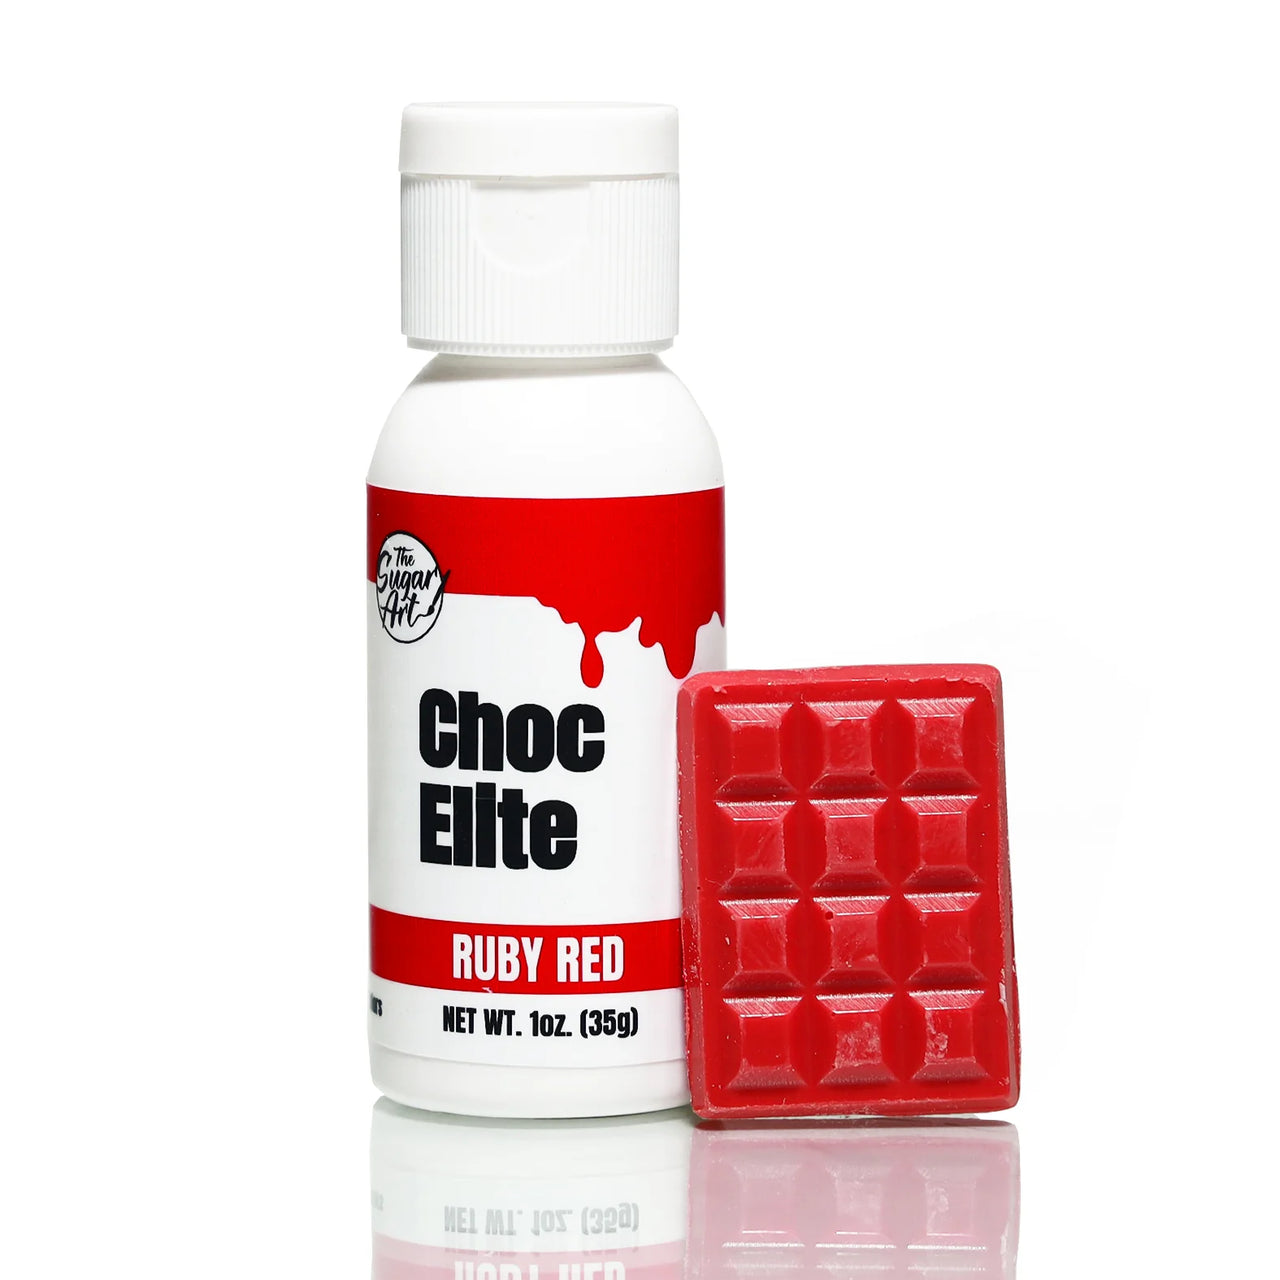 Ruby Red Choc Elite 1oz (35g)